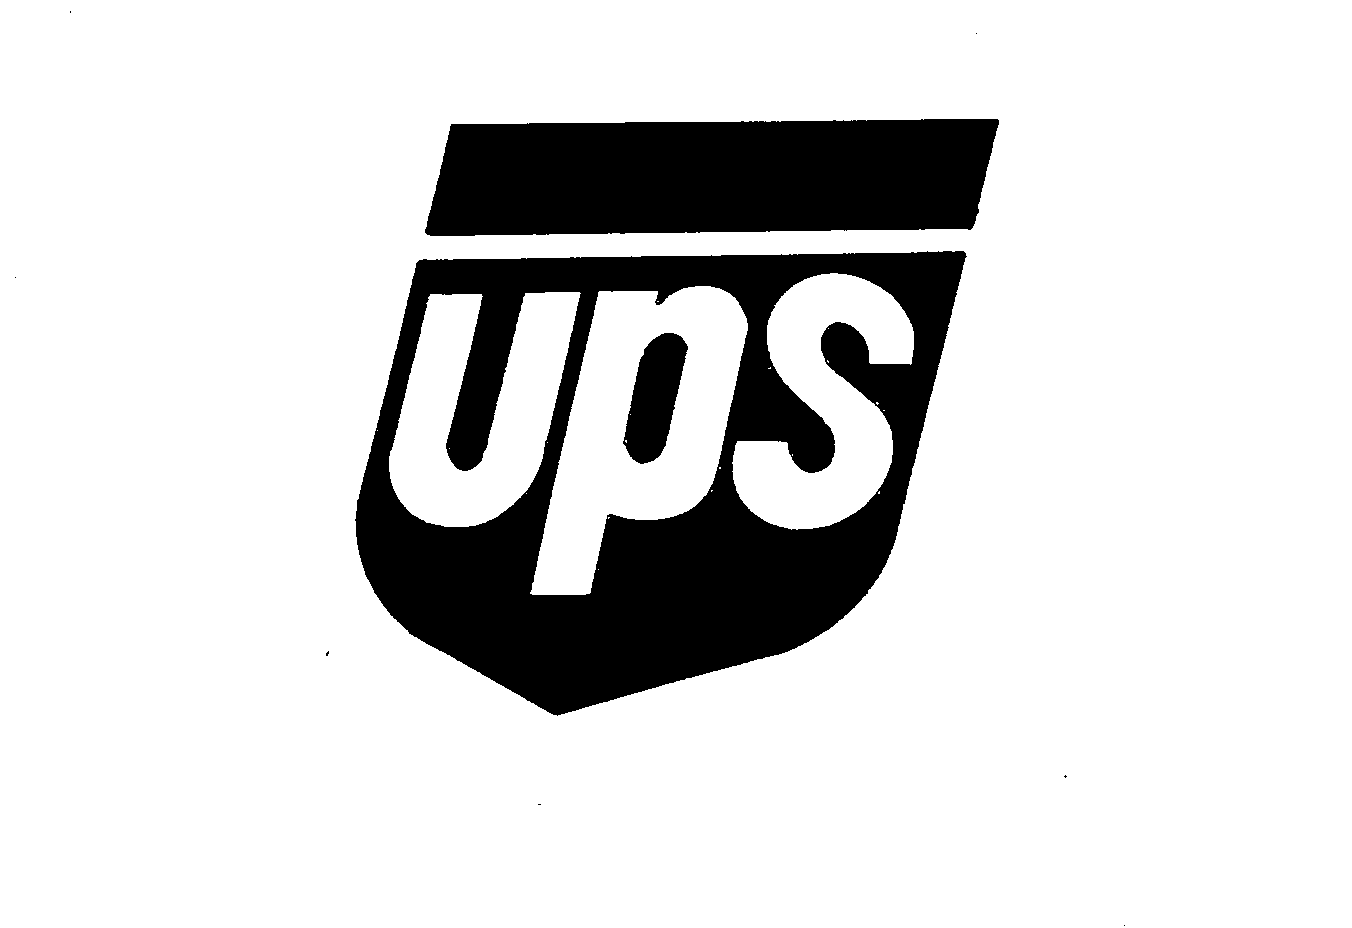 Trademark Logo UPS